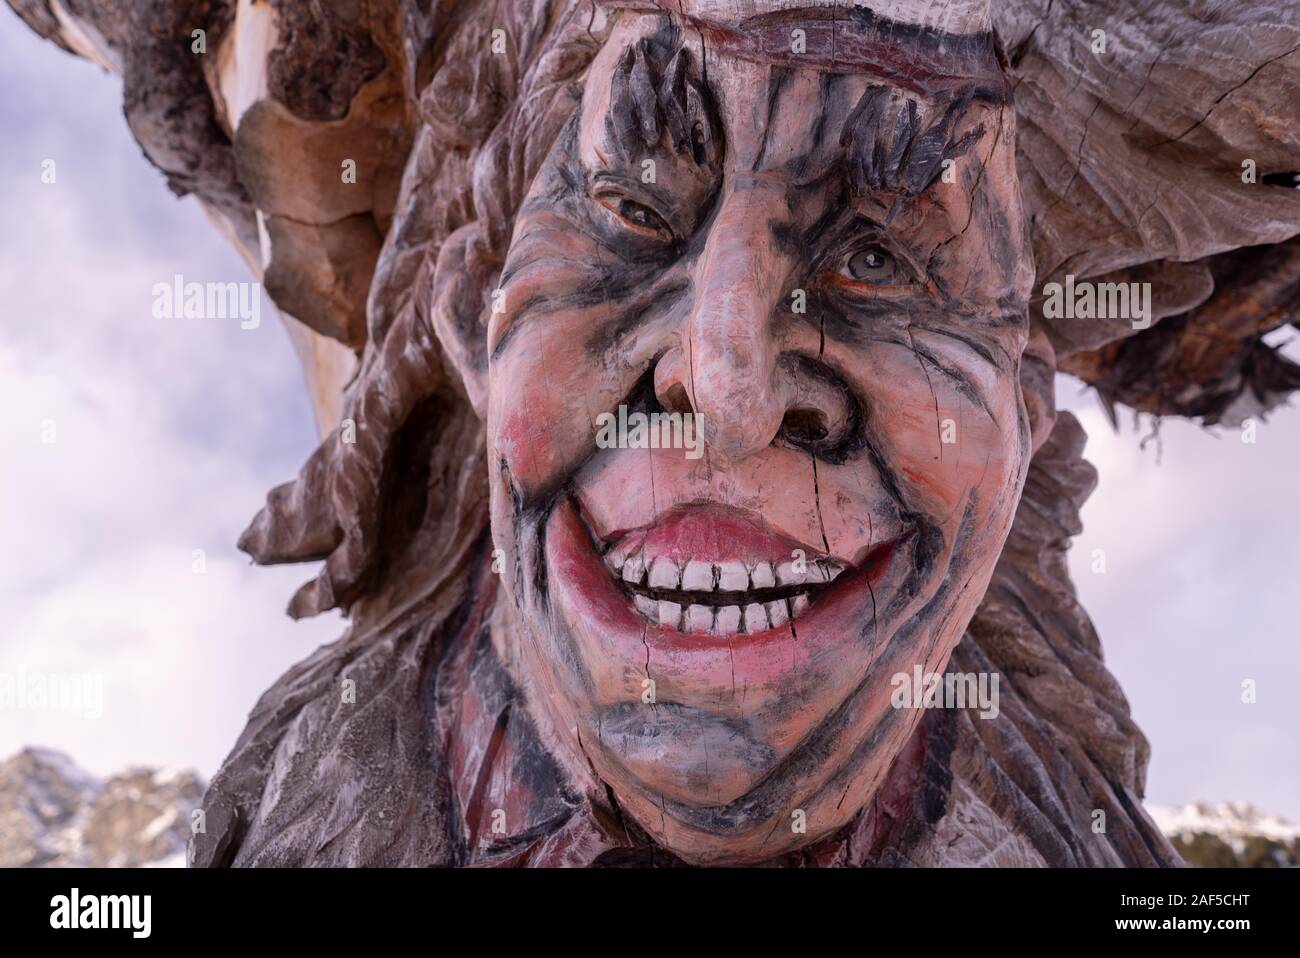 Cara de monstruo feo fotografías e imágenes de alta resolución - Alamy